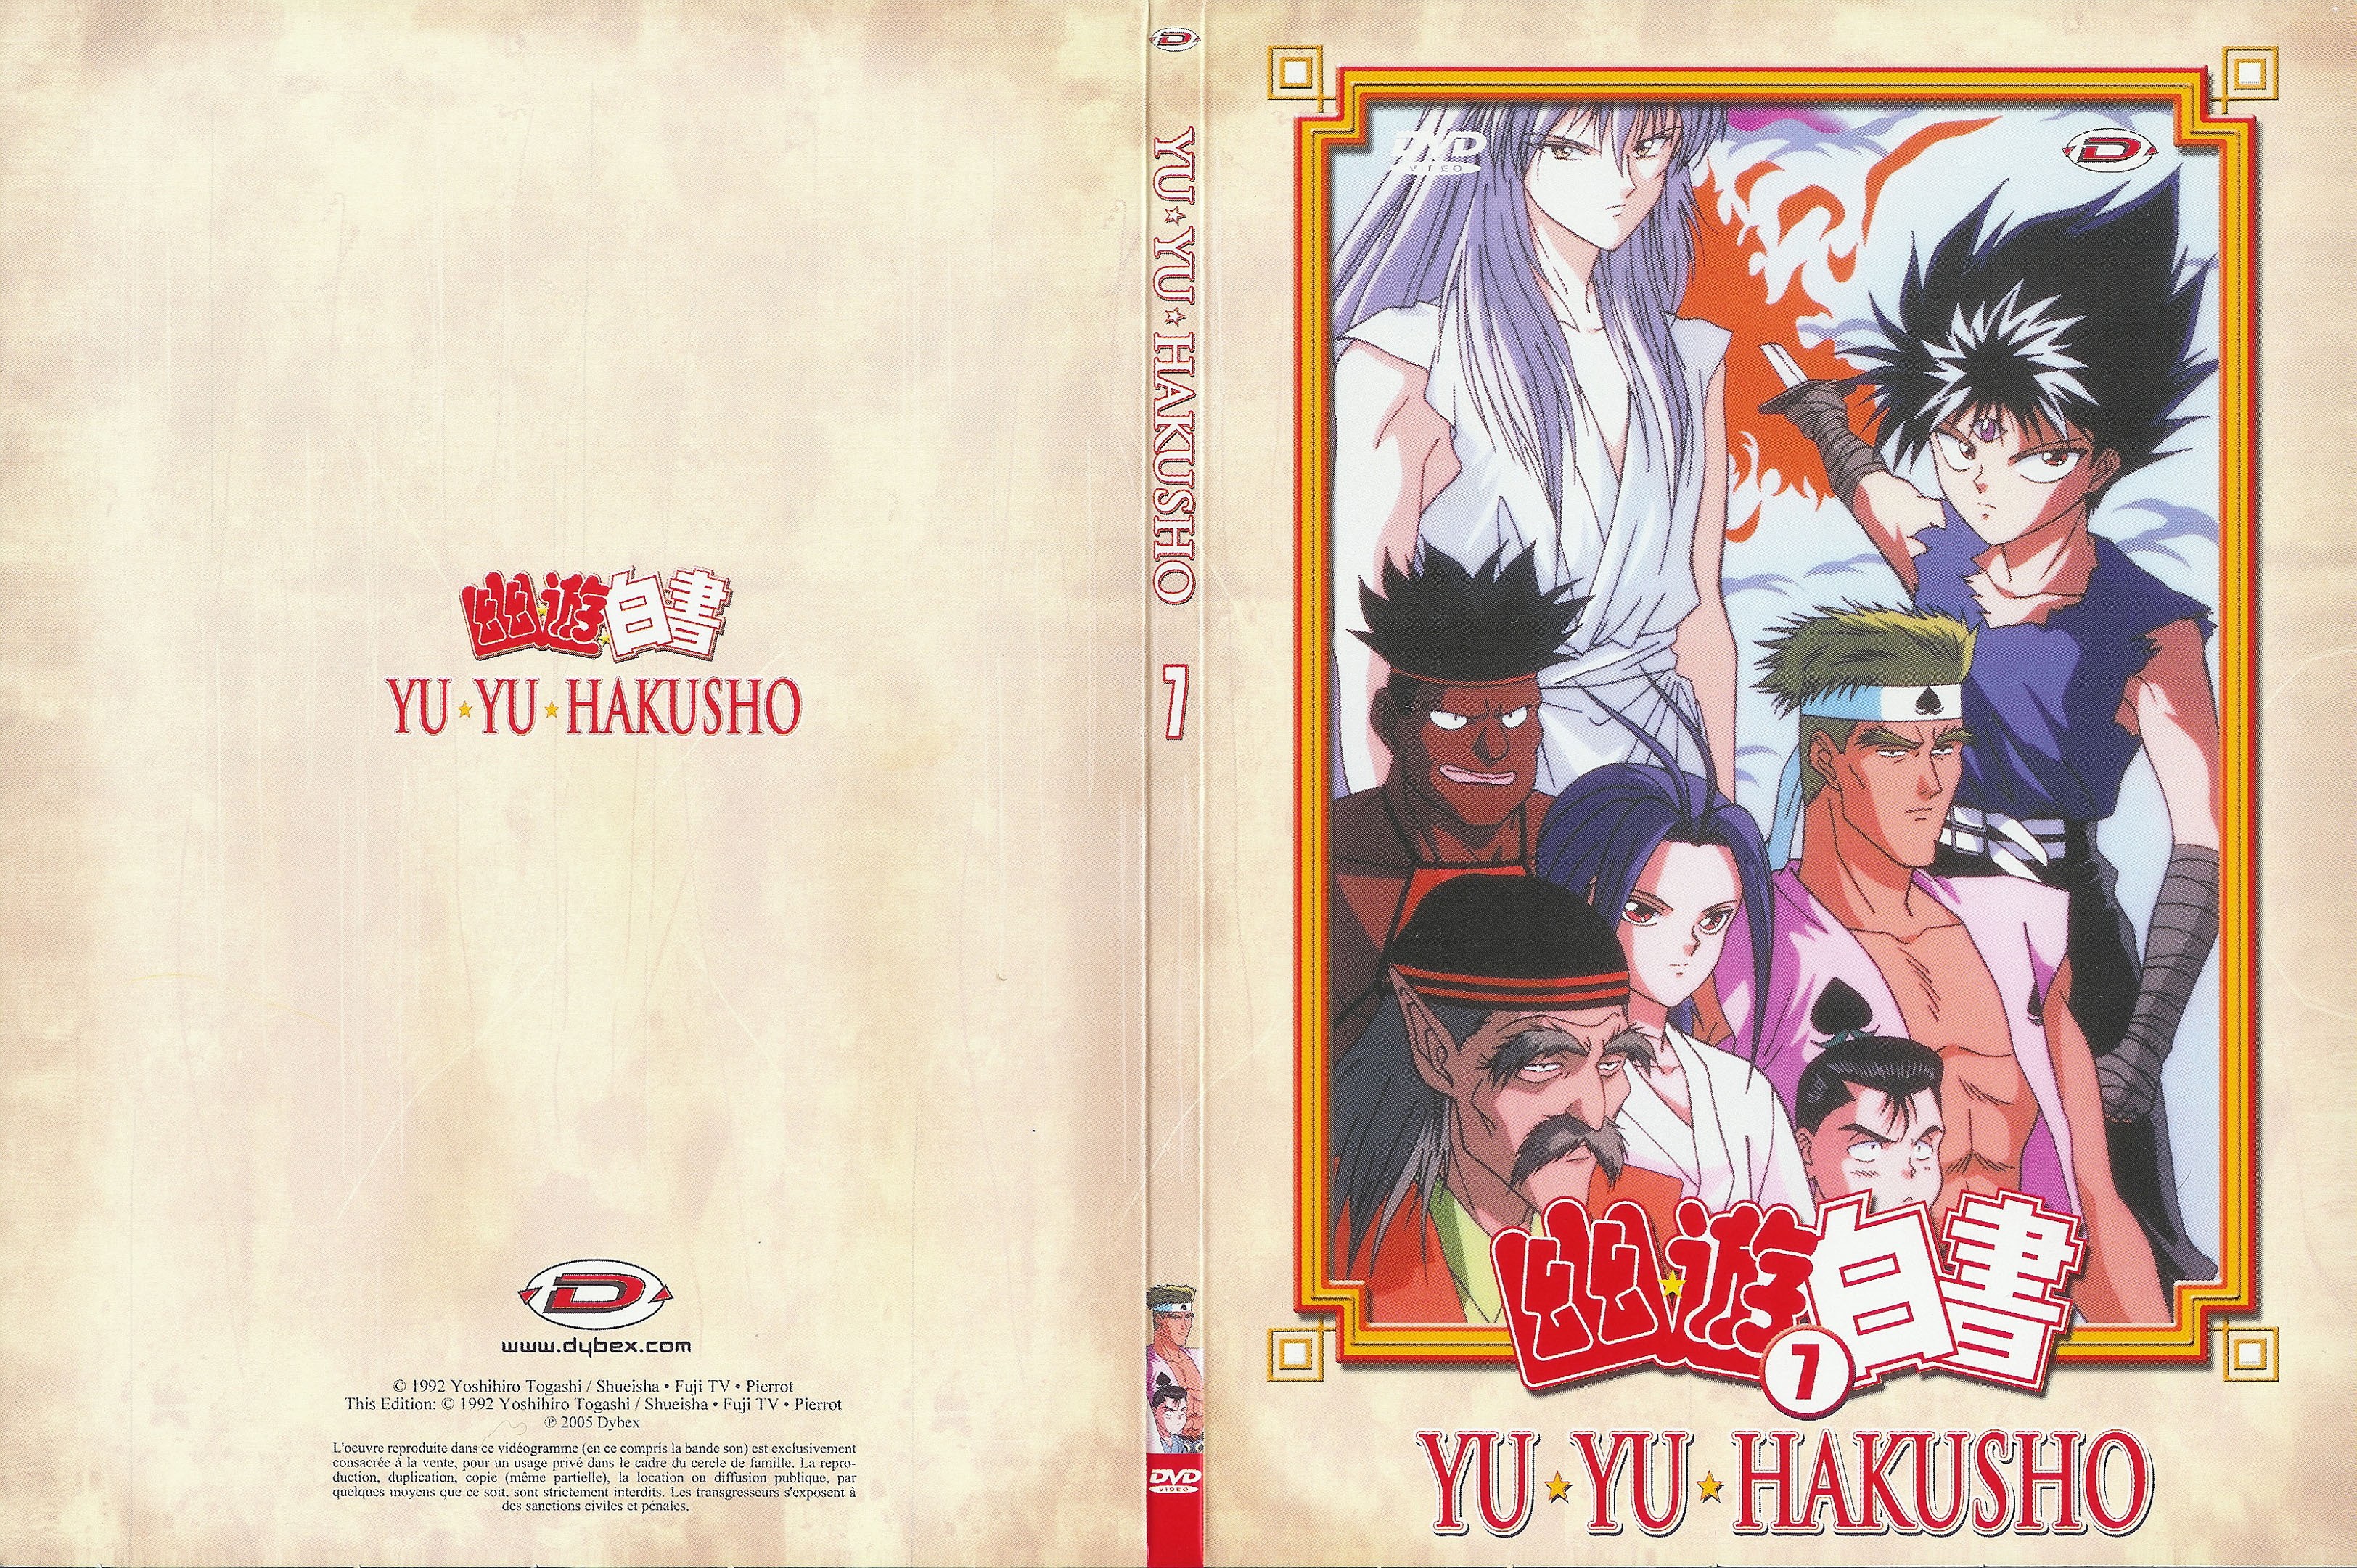 Jaquette DVD Yu yu hakusho vol 07